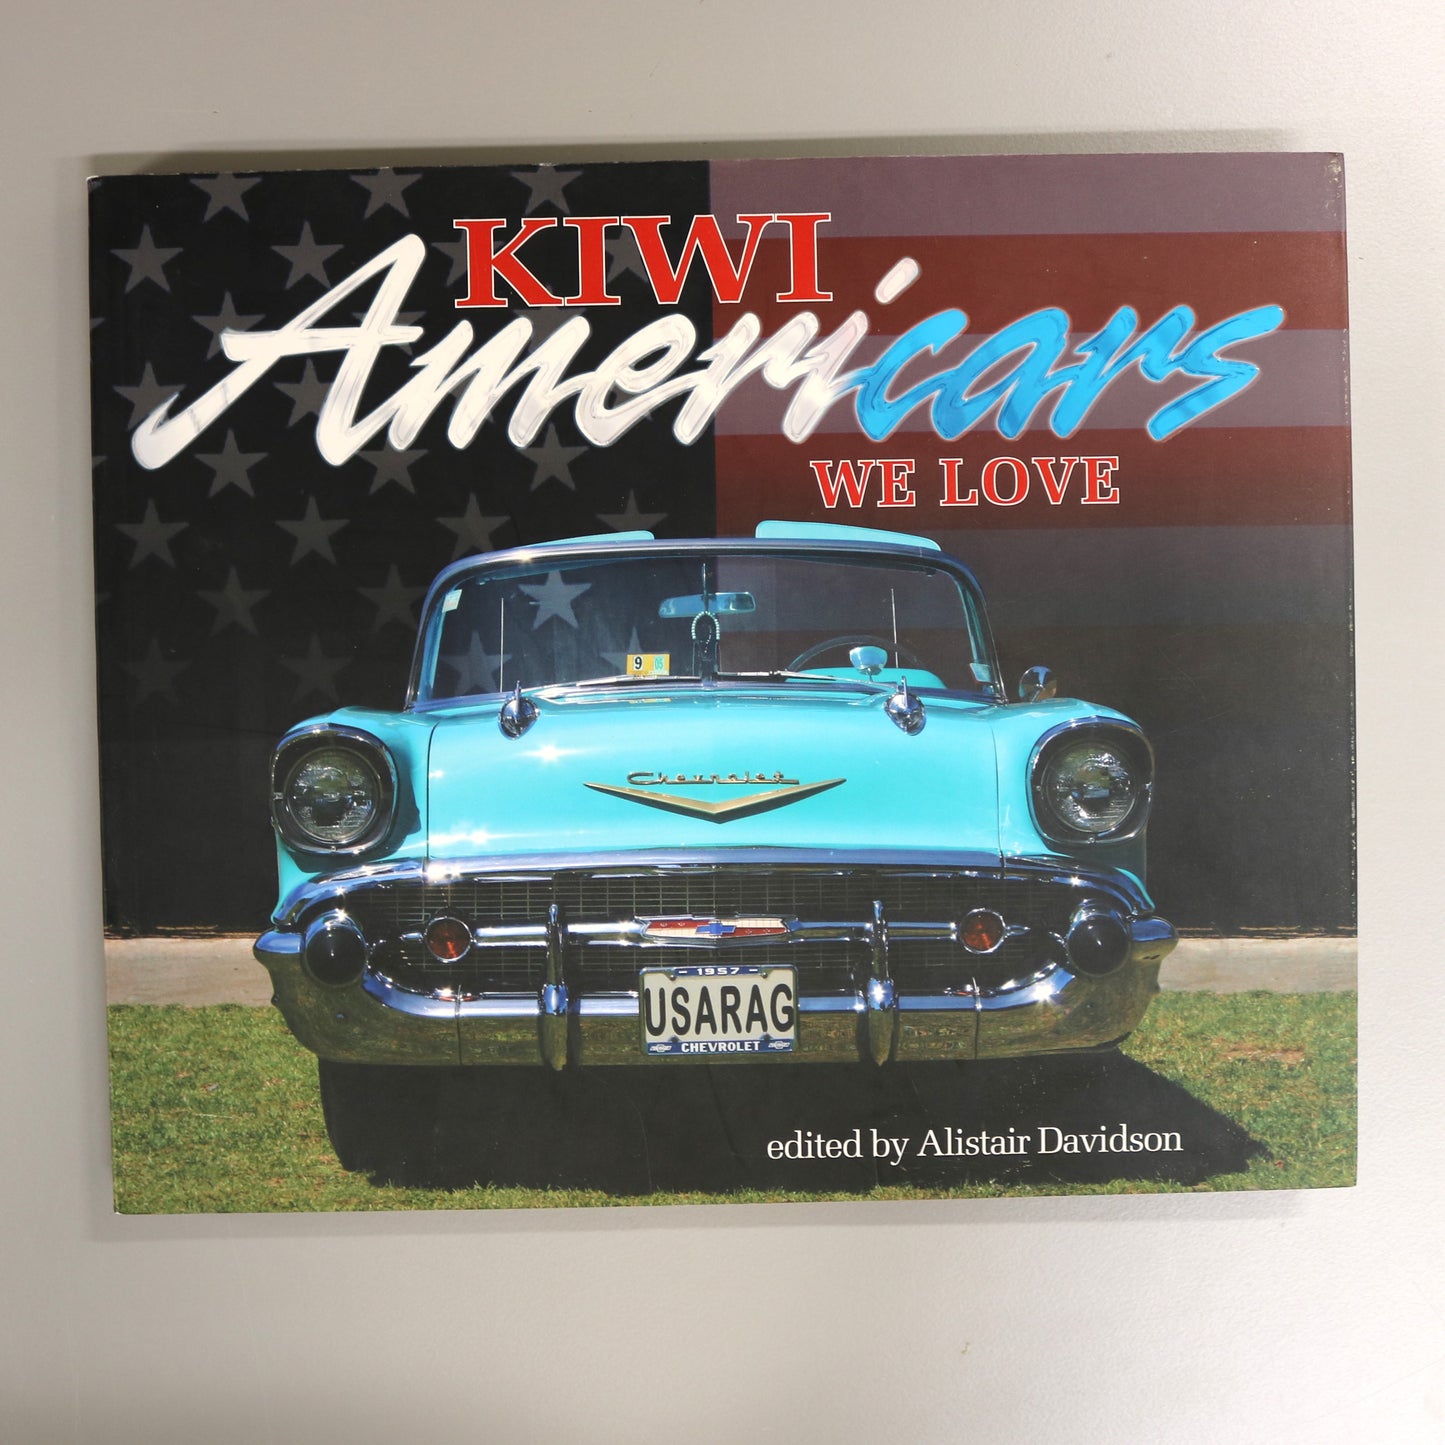 Kiwi Americars We Love American Vehicles Cars Automobile Models Illustrated Book